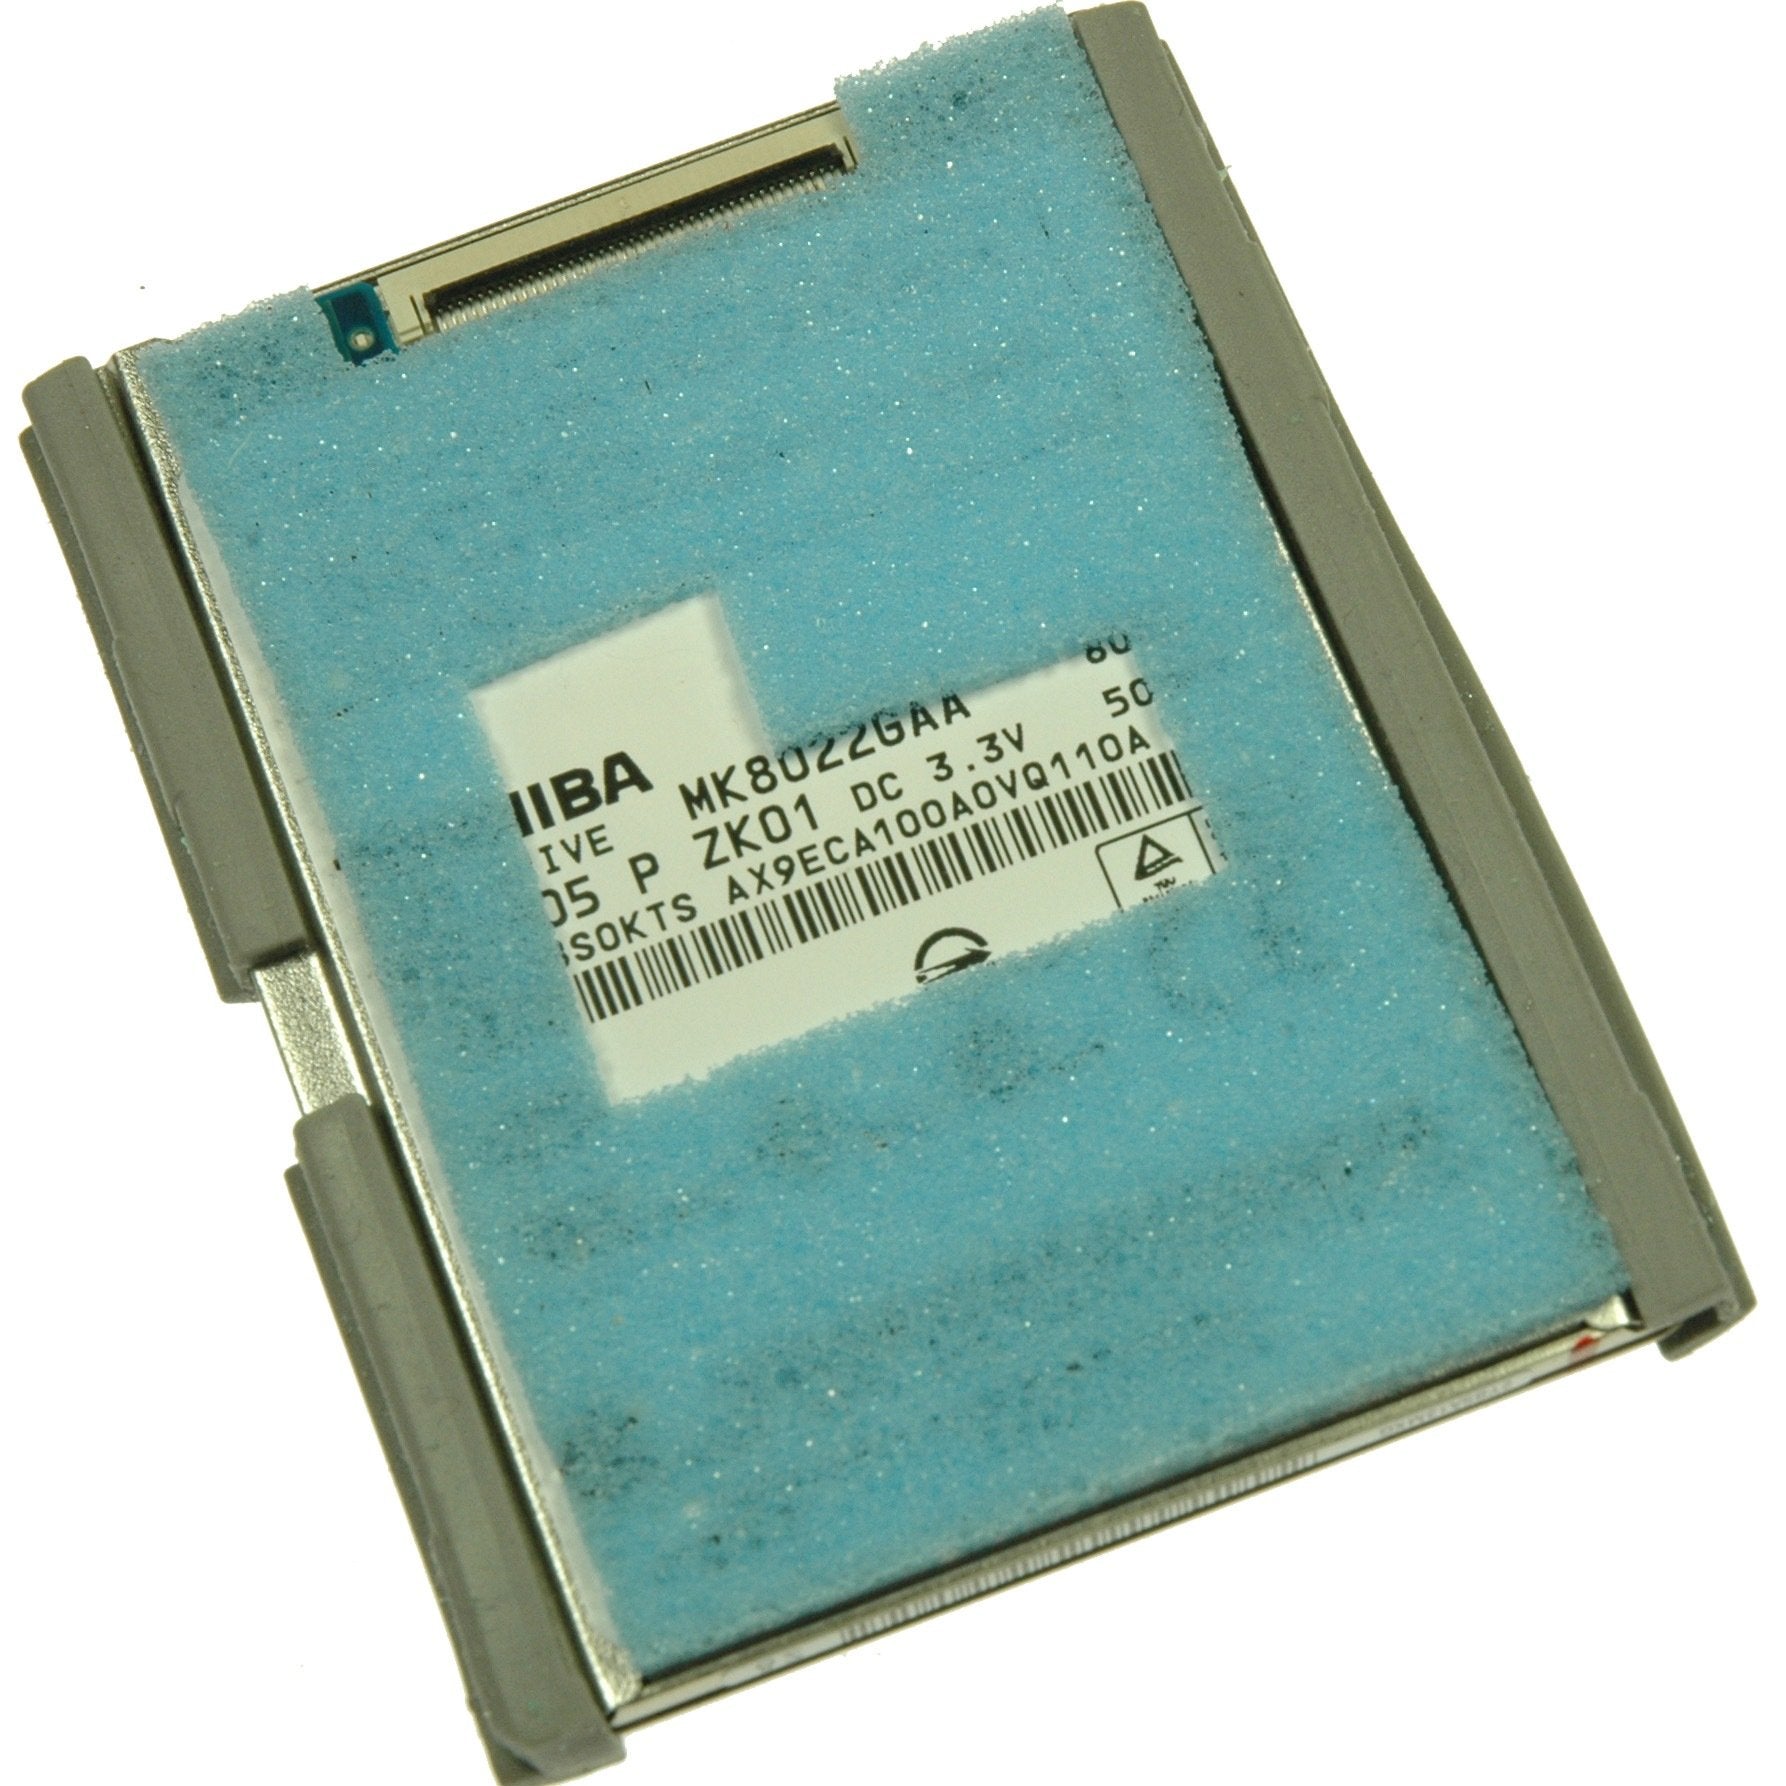 iPod Classic 80 GB Hard Drive Used With Padding